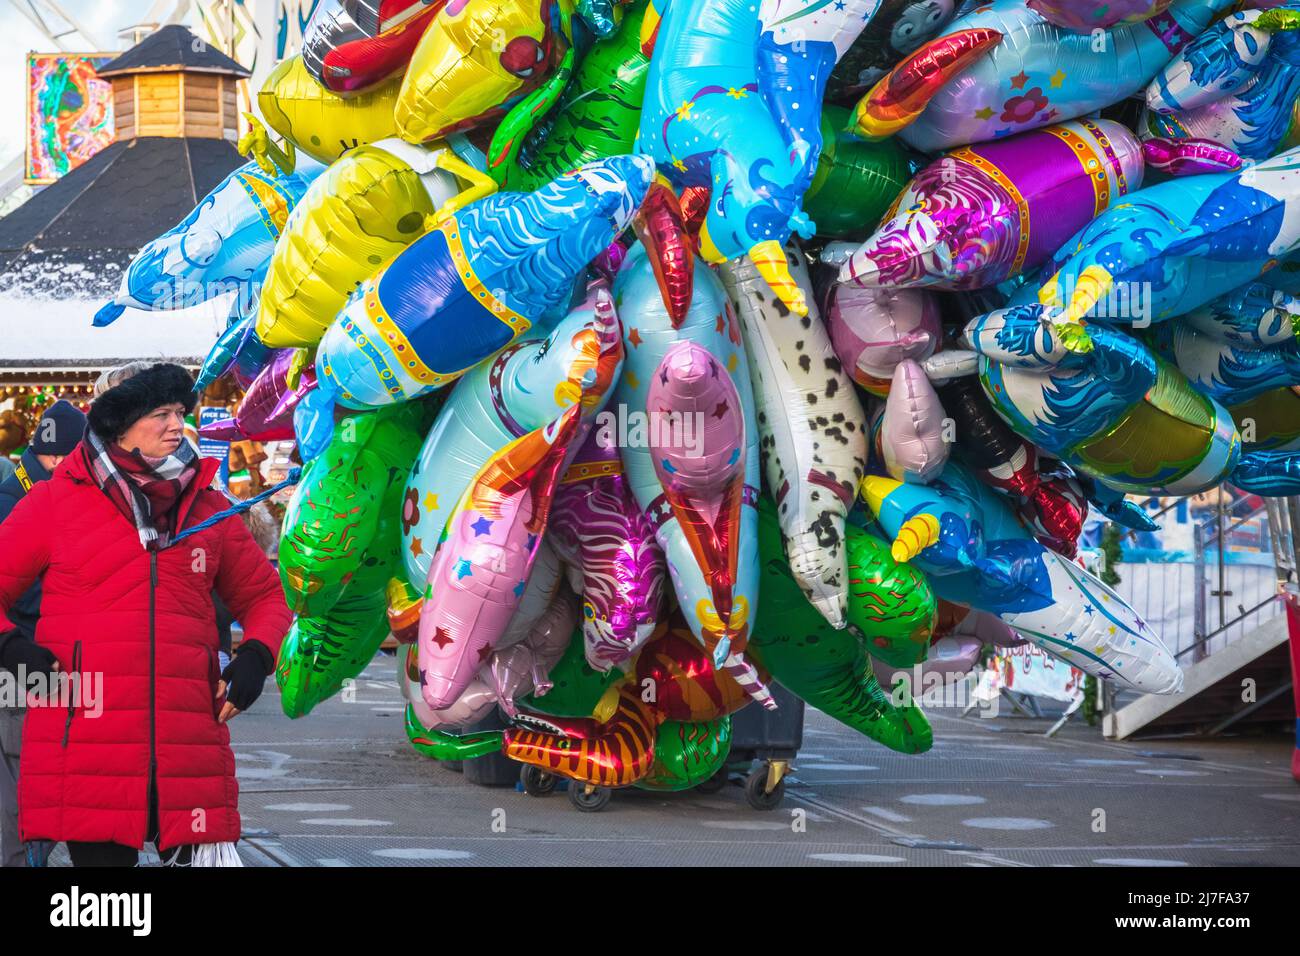 London, UK - 28 November, 2021 - Female street vendor sells multiple cartoon character helium balloons at Christmas funfair Hyde Park Winter Wonderlan Stock Photo